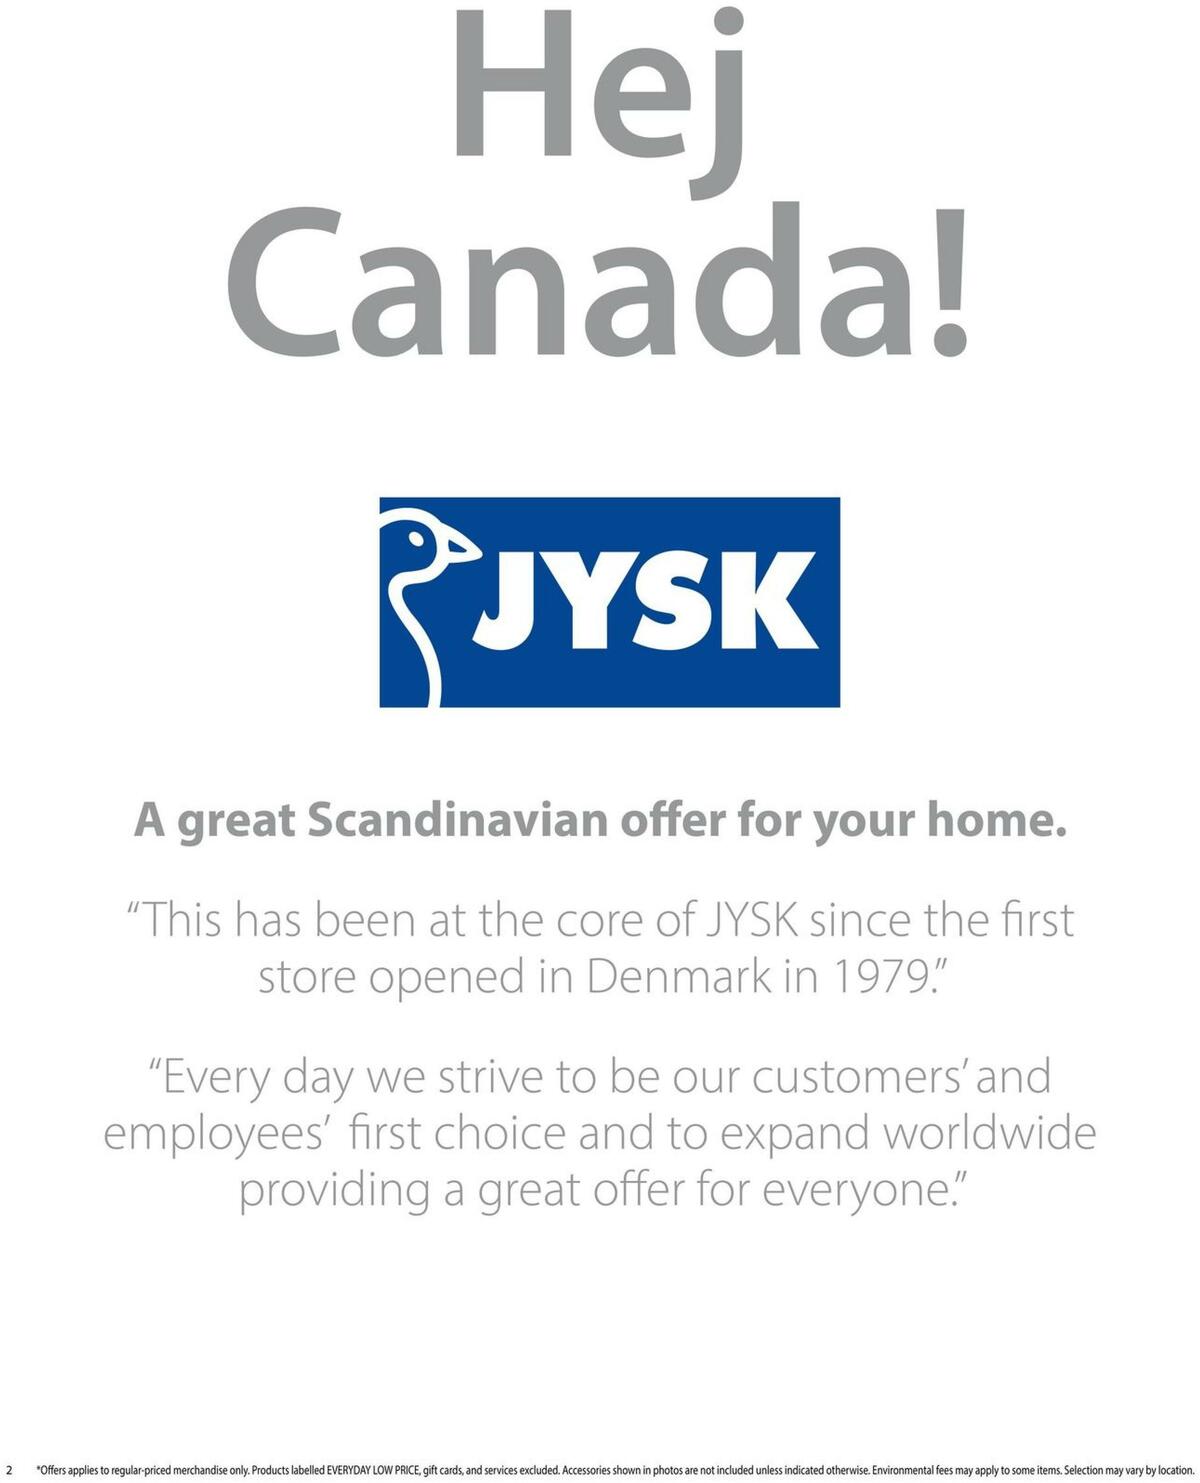 JYSK Flyer from April 27